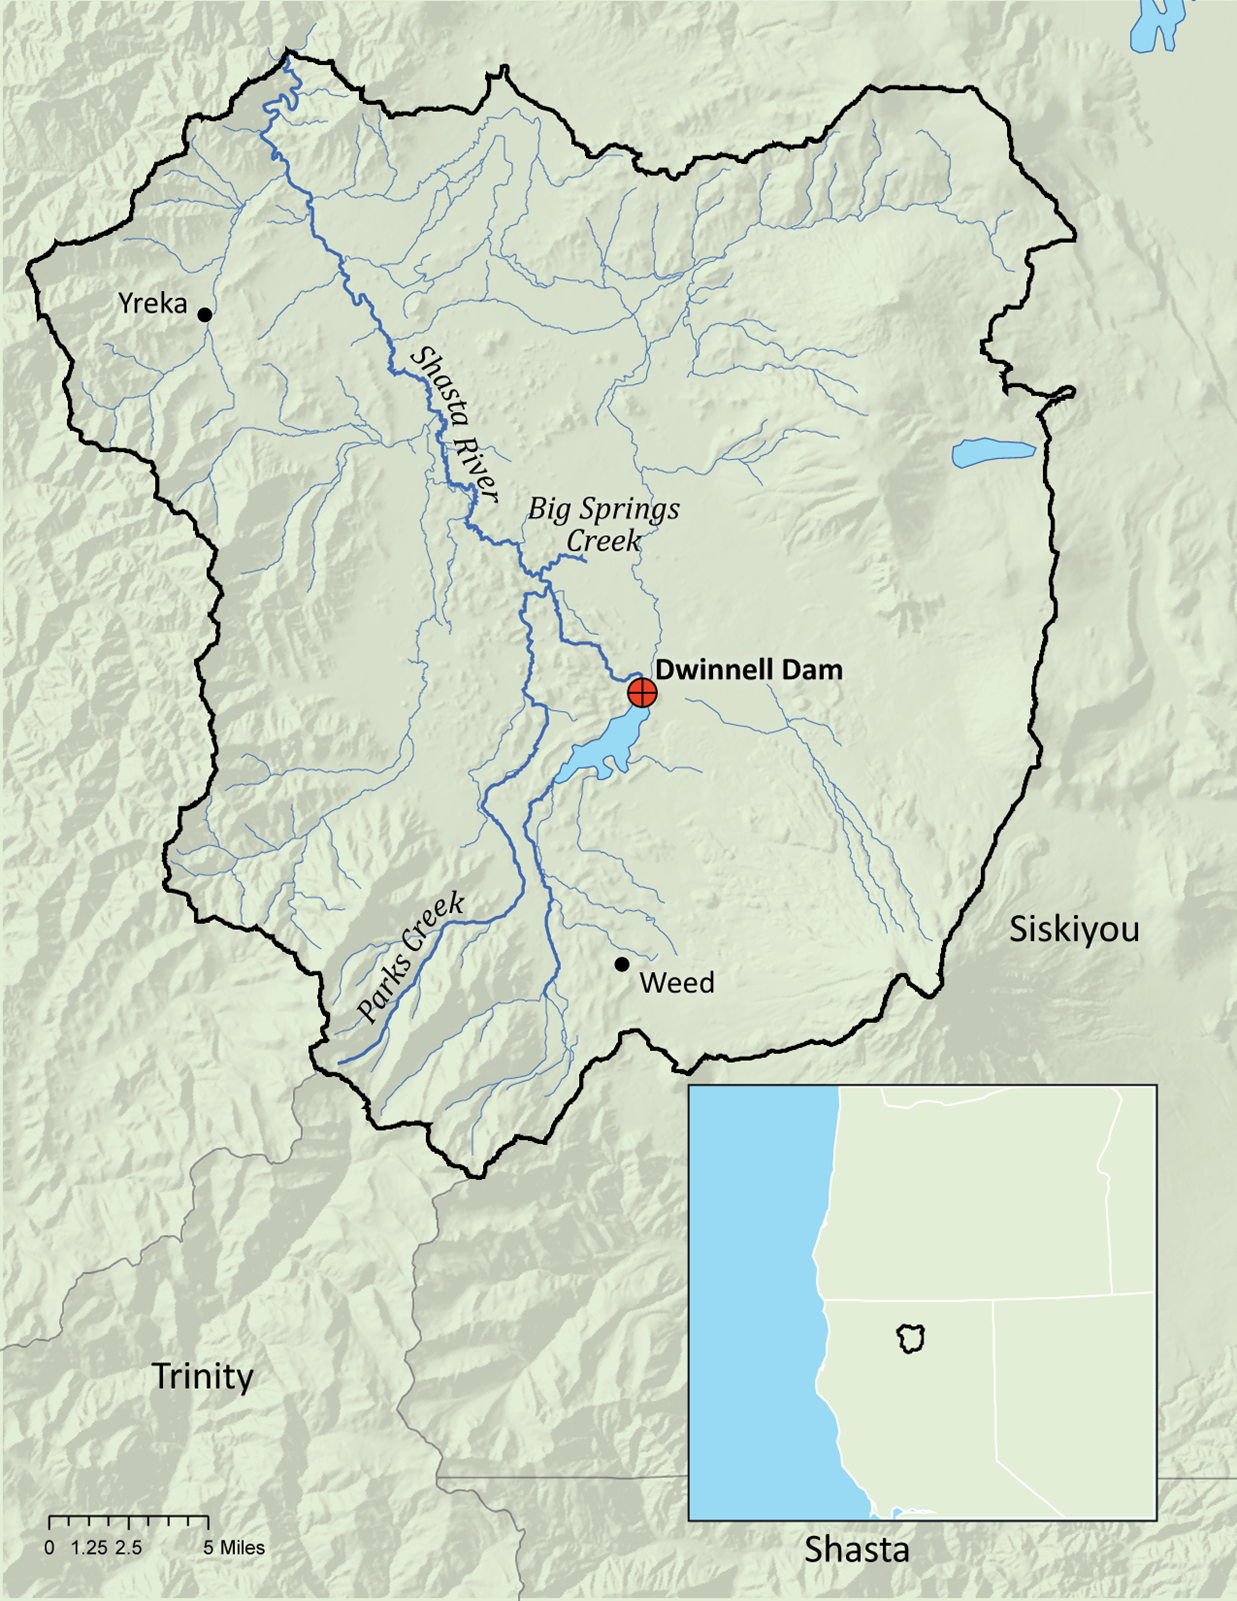 Shasta Valley Focal Geography 